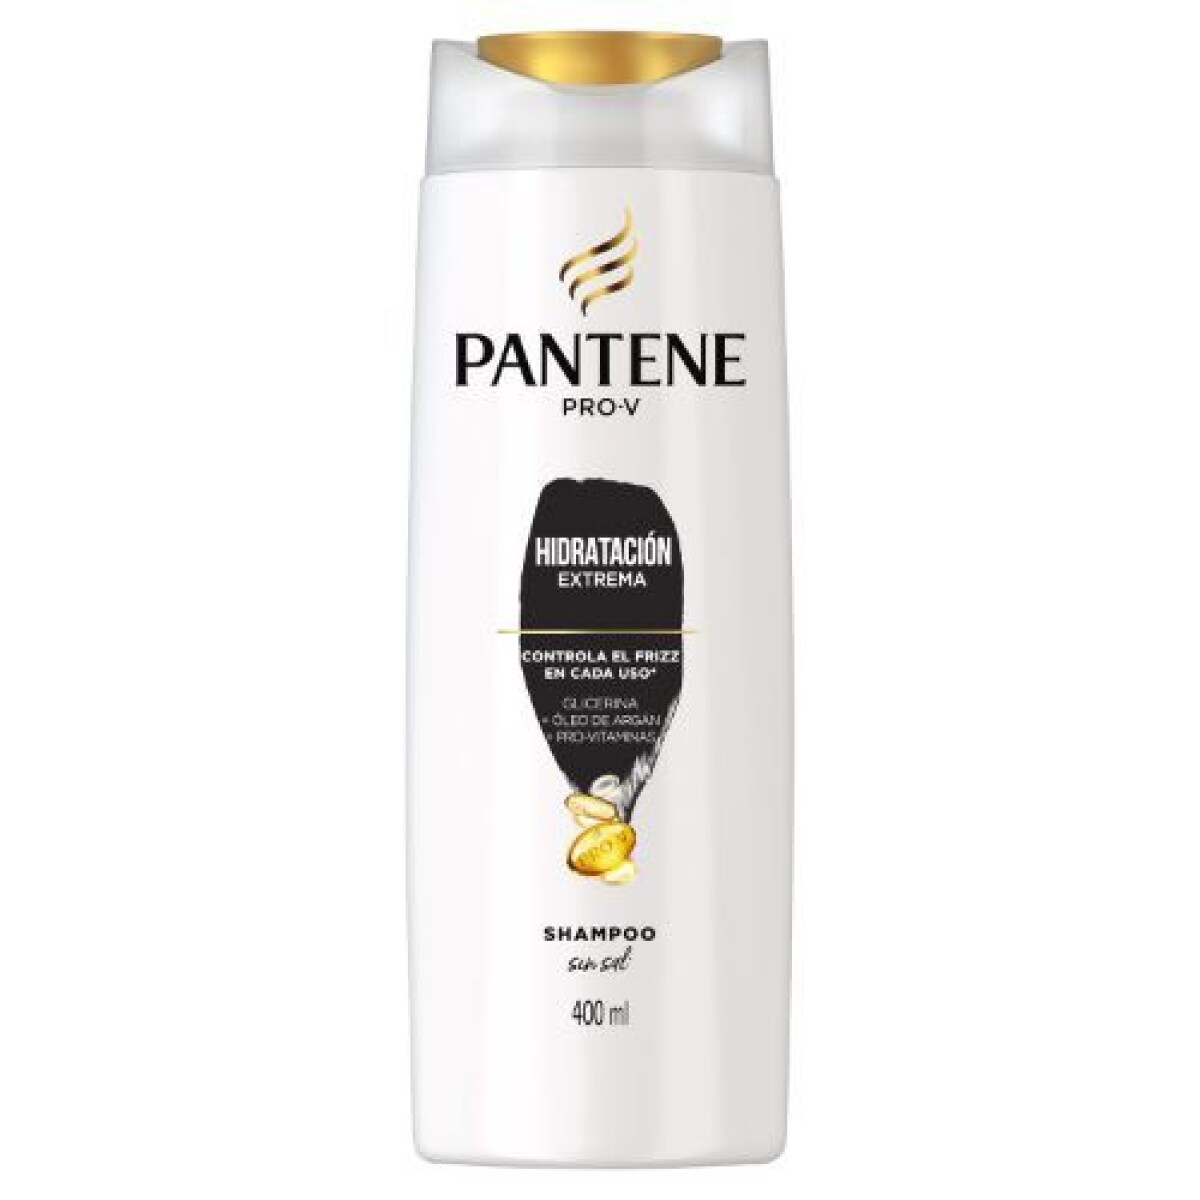 Pantene Shampoo Hidrataciòn Extrema 400ml 